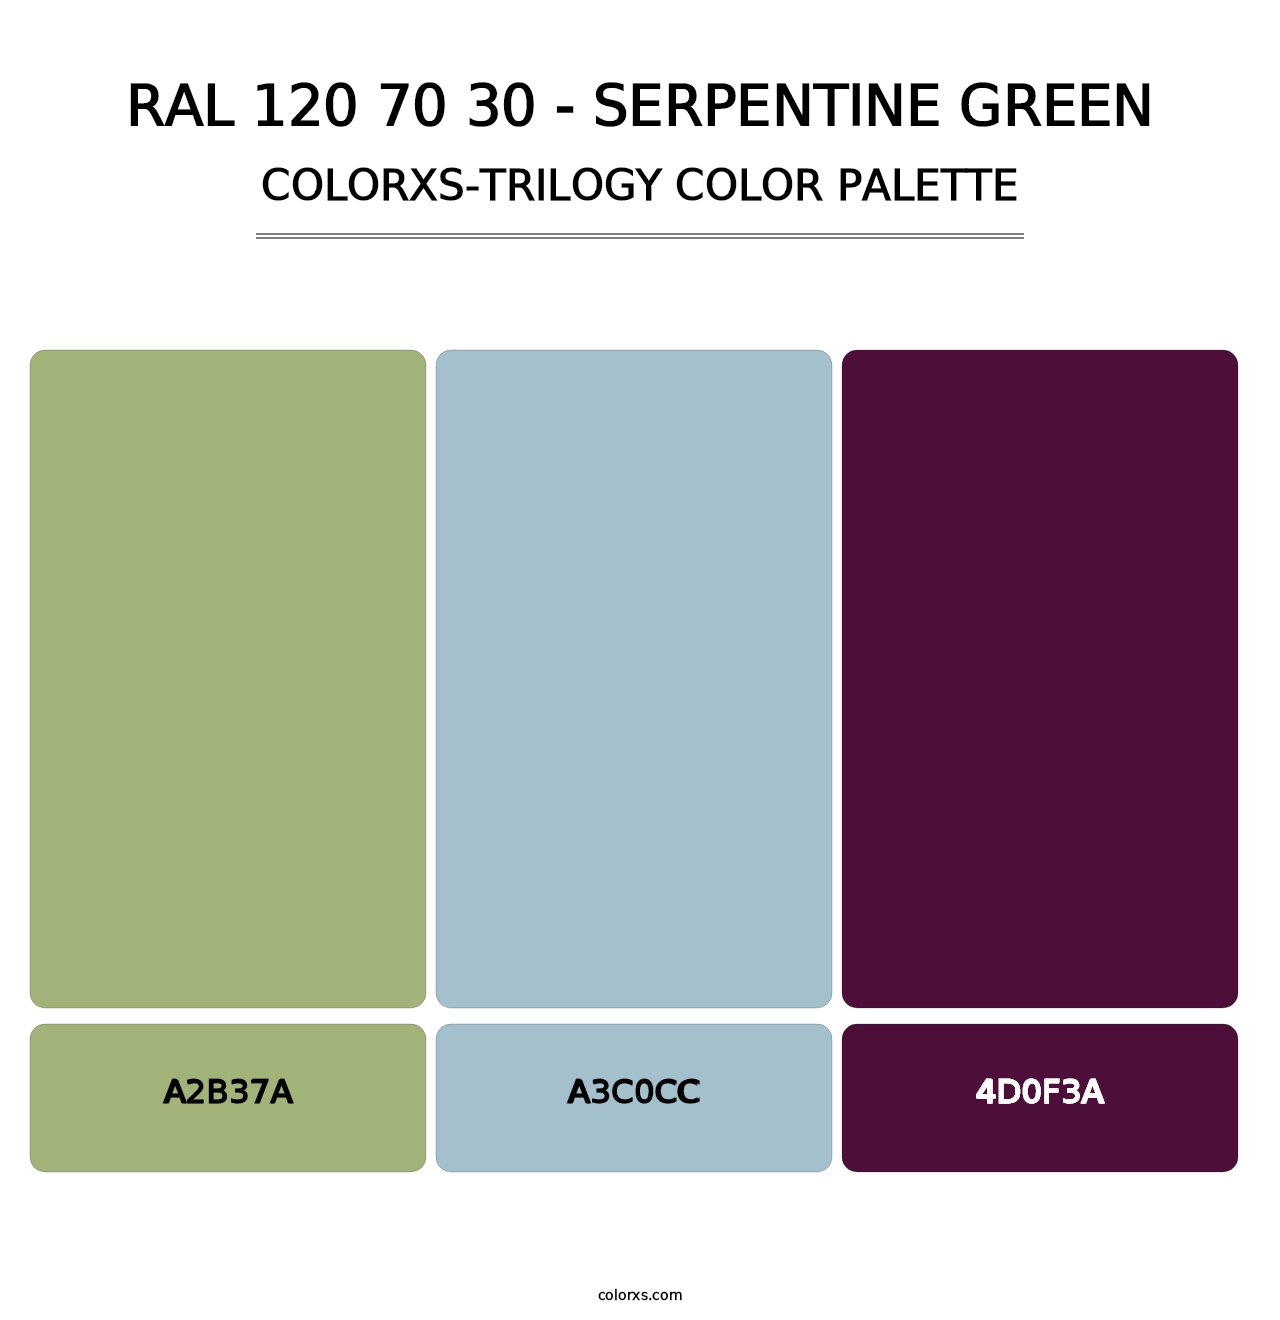 RAL 120 70 30 - Serpentine Green - Colorxs Trilogy Palette